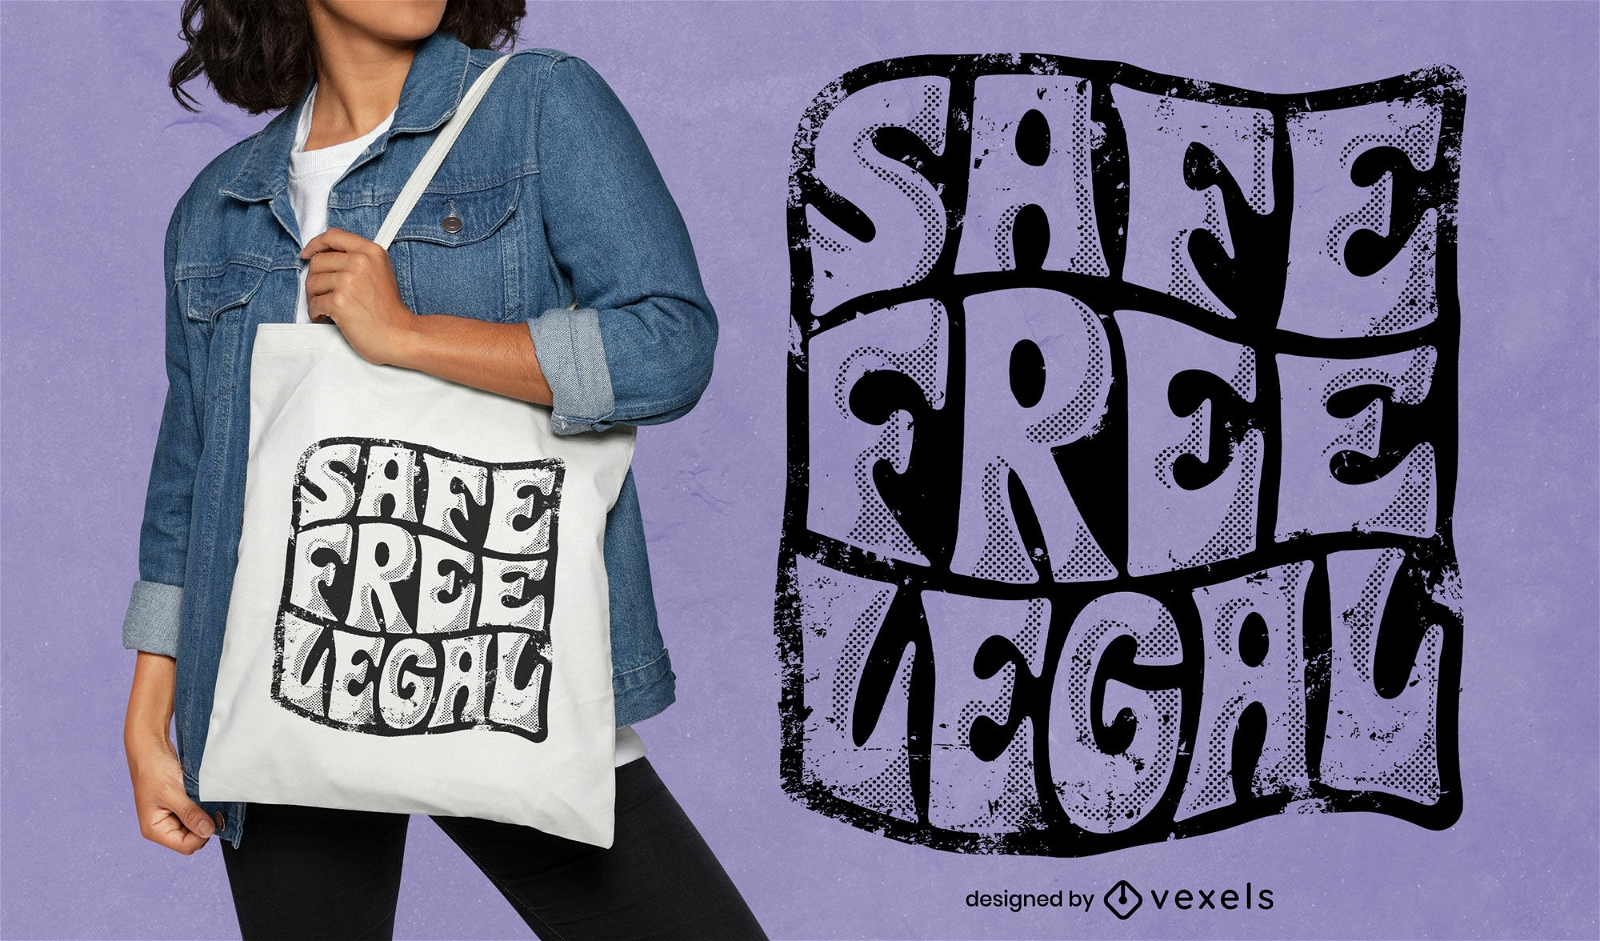 Diseño de bolso de mano feminista legal gratuito seguro